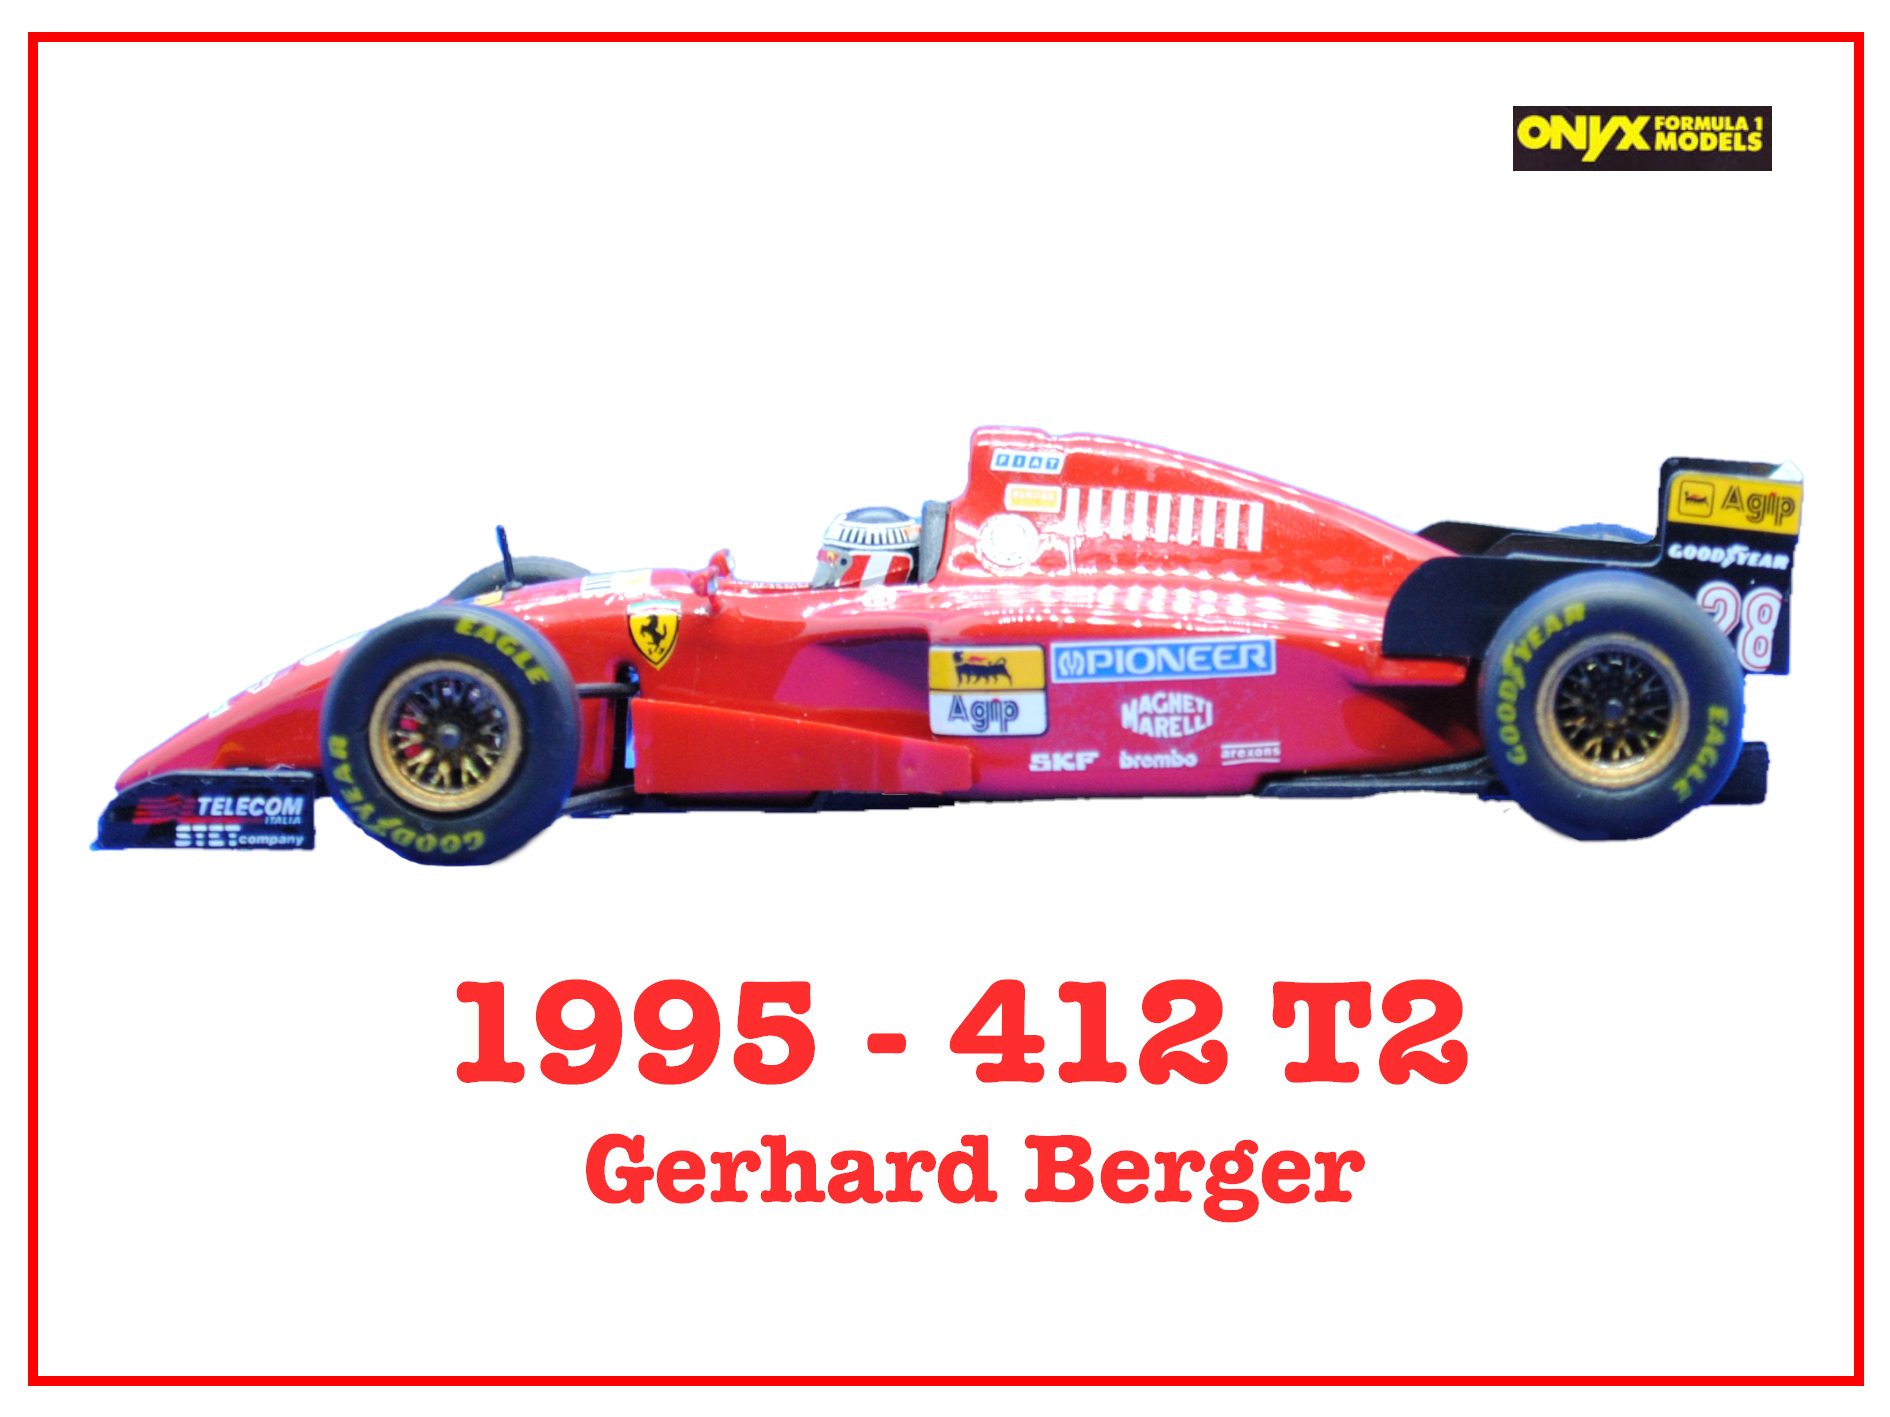 Immagine Ferrari F 412 T2 Gerhard Berger